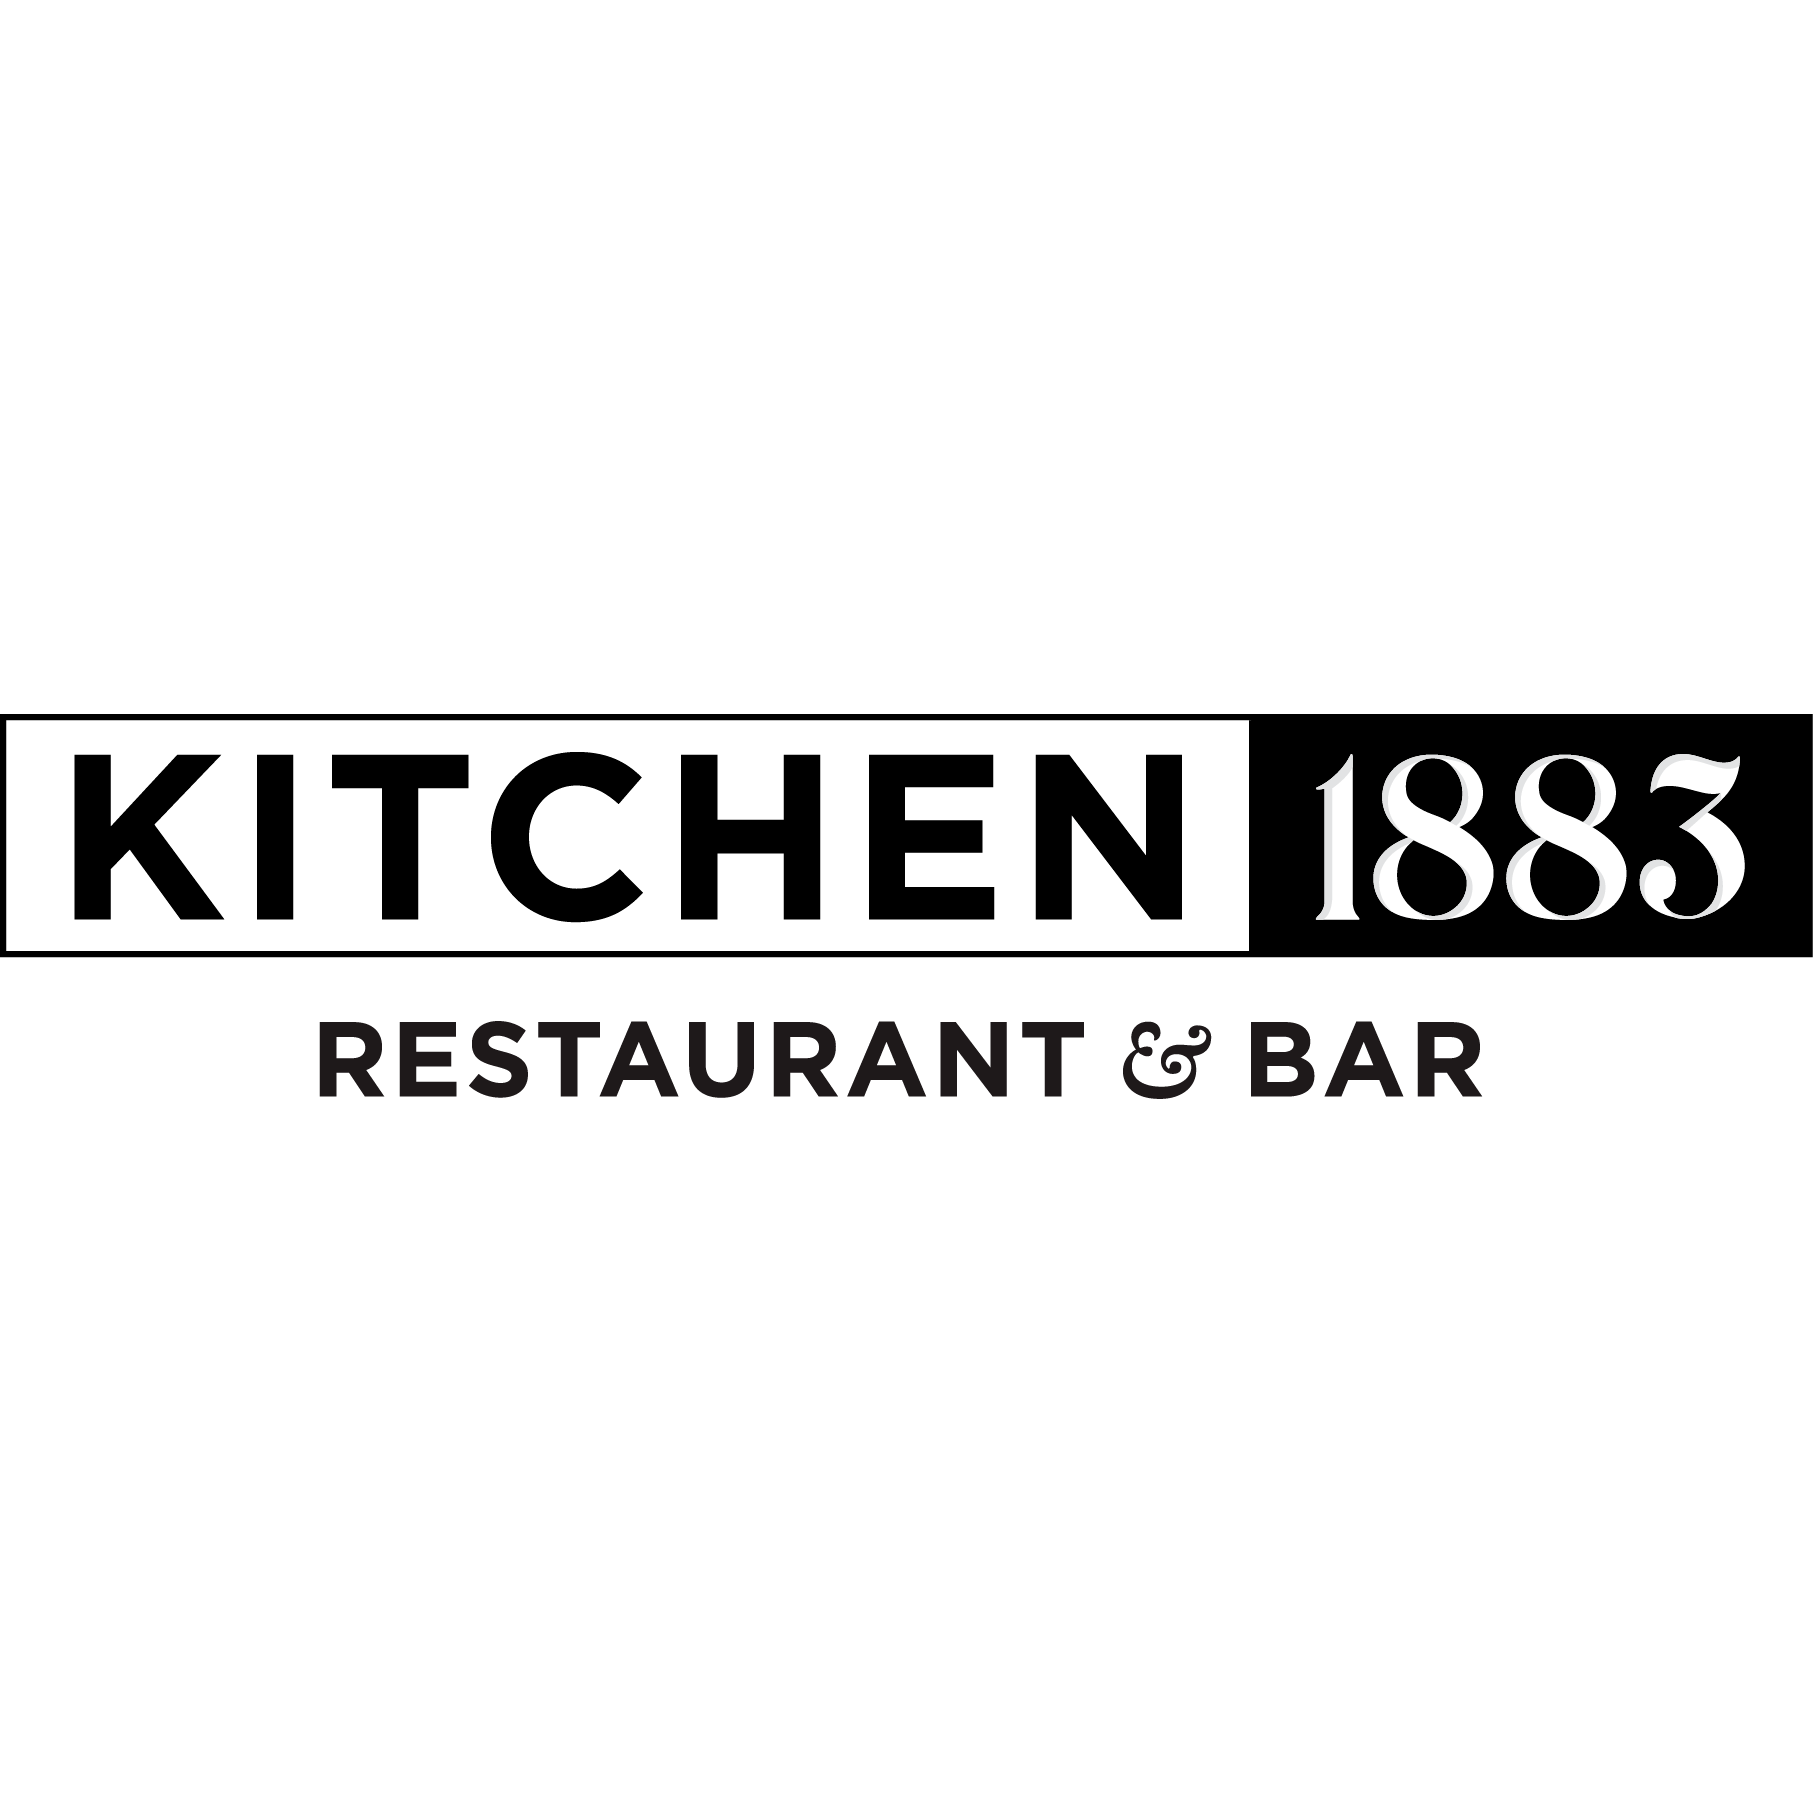 Kitchen 1883 Café & Bar